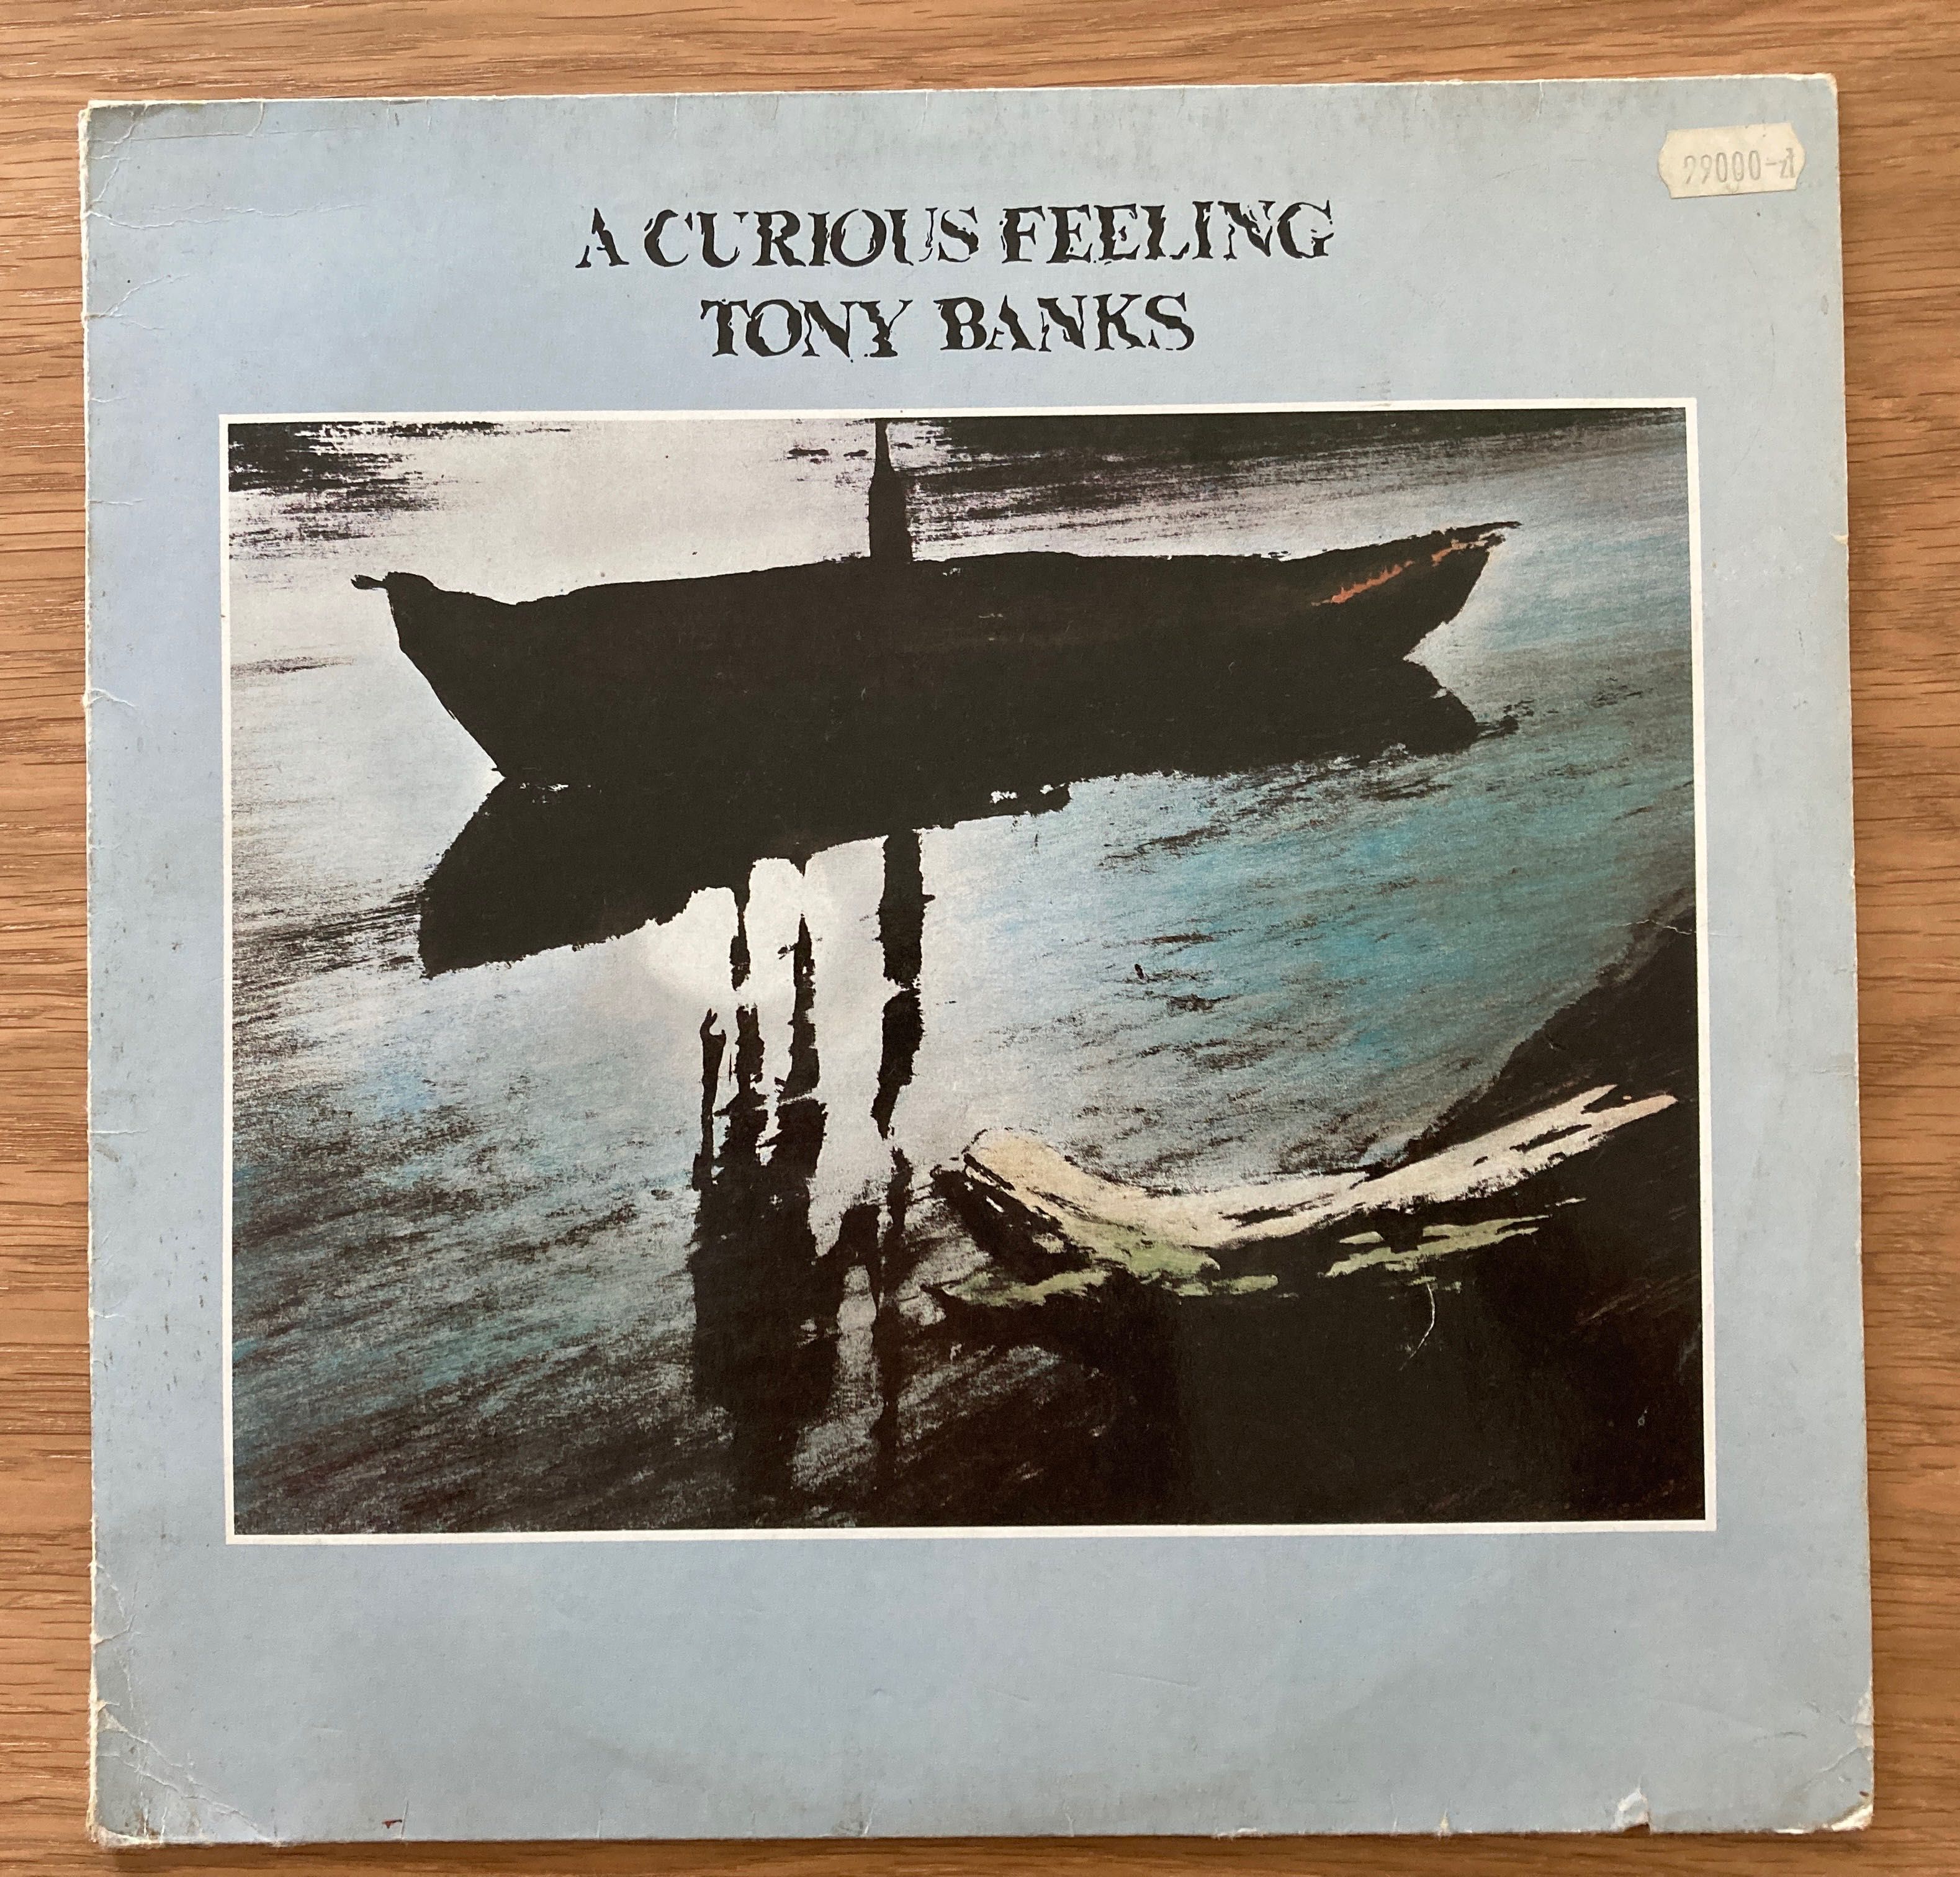 Tony Banks, A Curious Feeling, winyl, 1979.